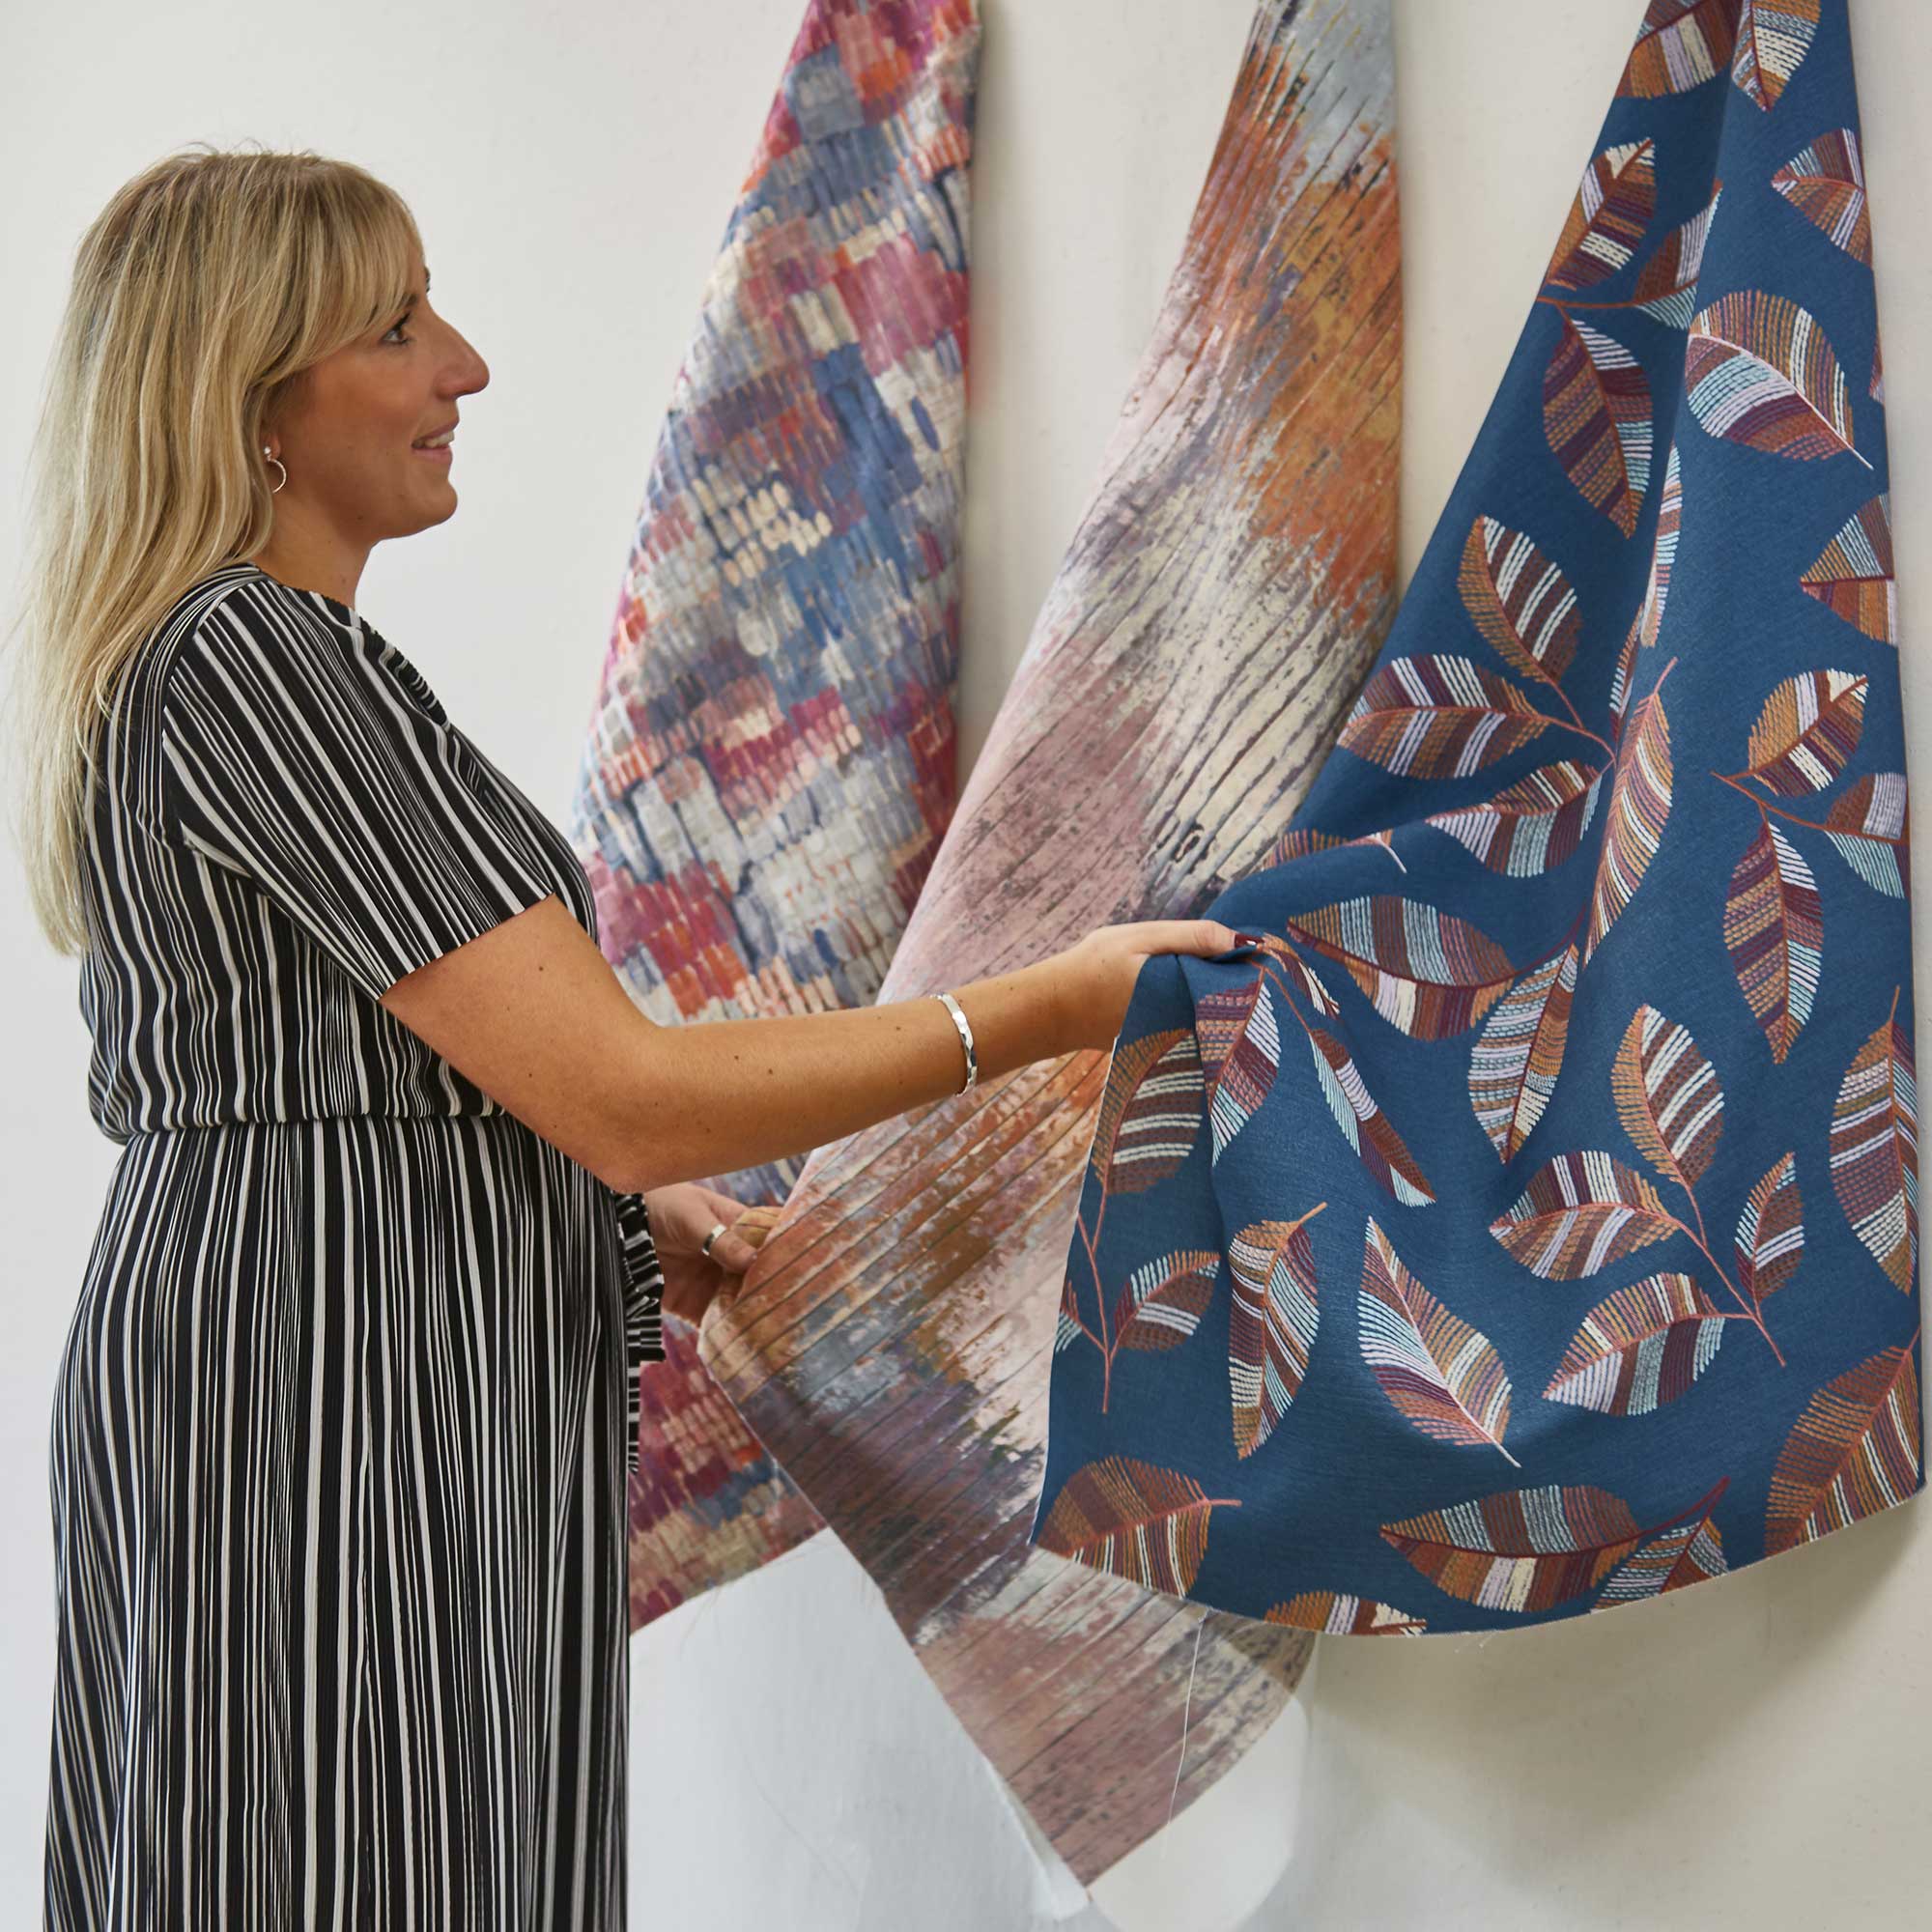 Marie Goodwin looking at hanging fabrics